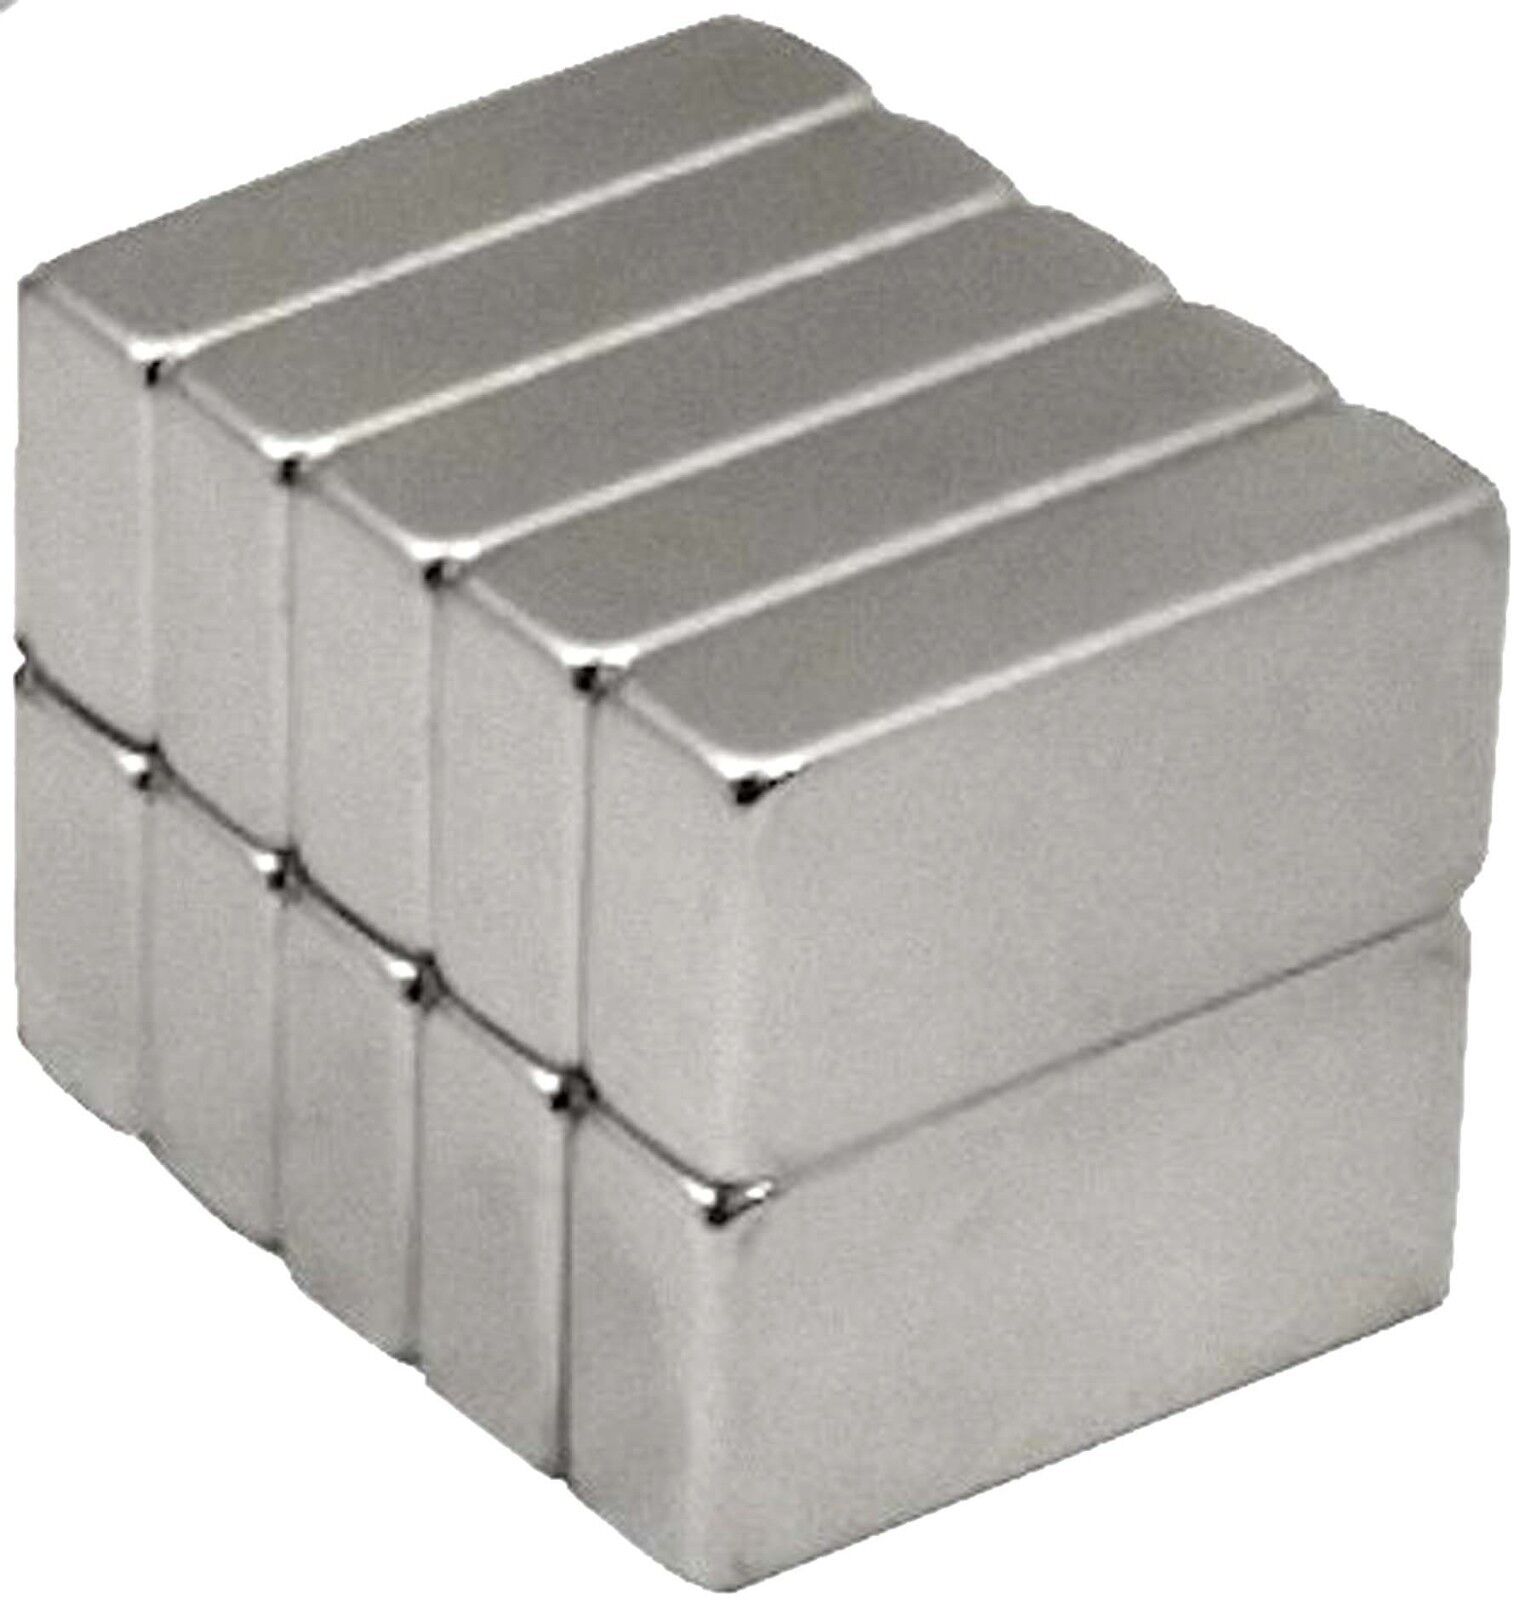 10 Neodymium Magnets 1/2 x 1/4 x 1/8 inch Block N48 Rare Earth